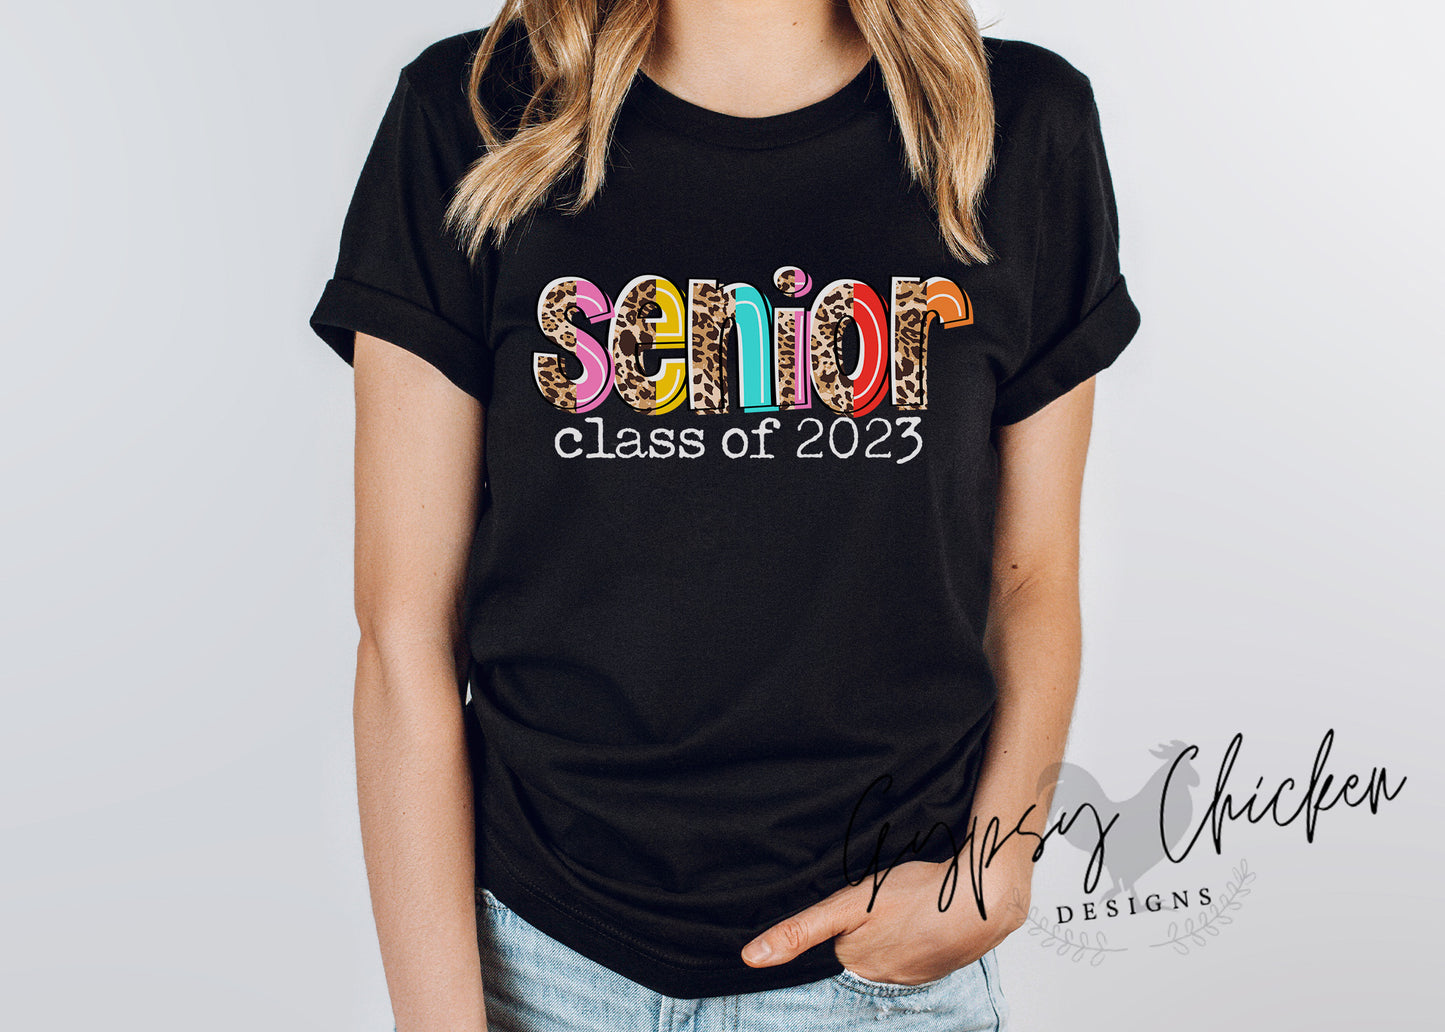 Senior Class of 2023